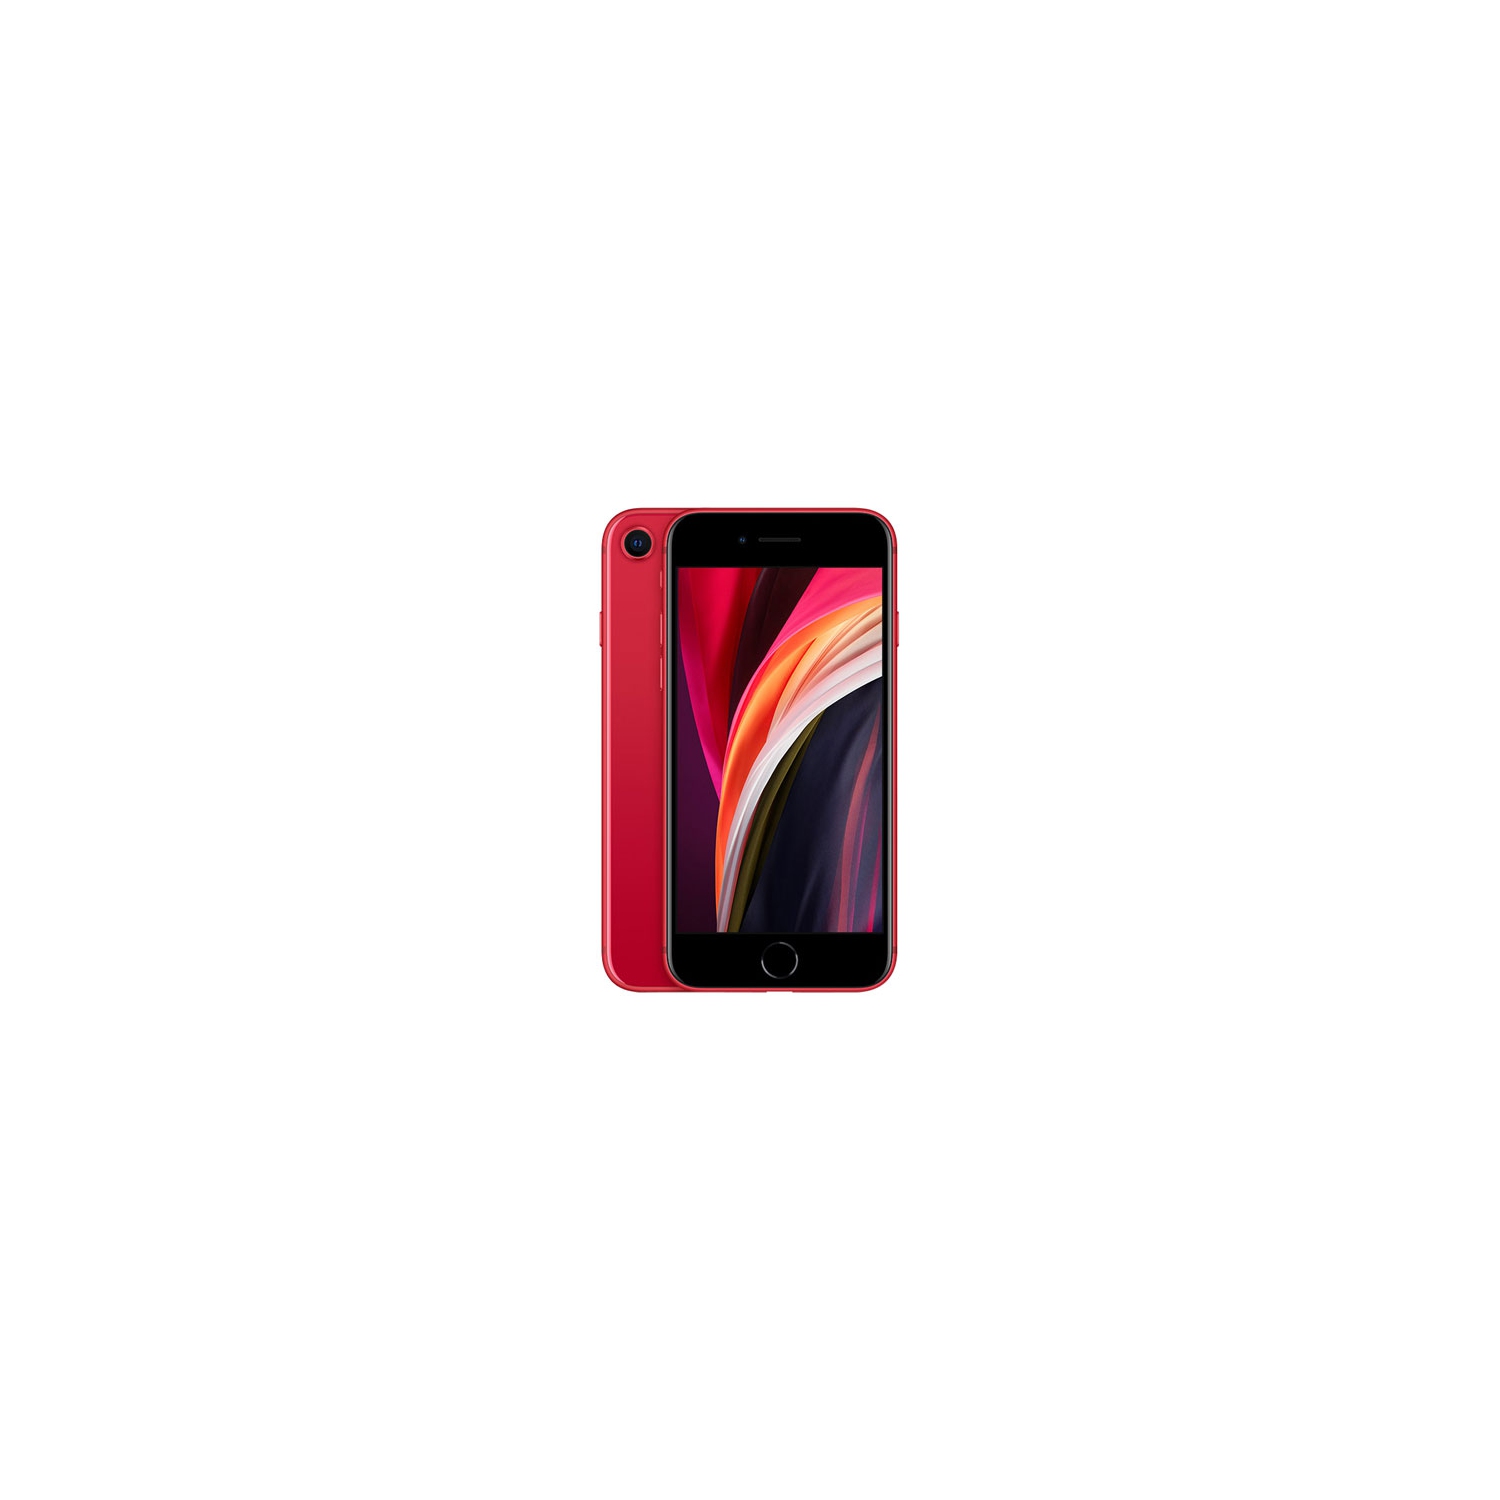 Refurbished (Excellent) - Apple iPhone SE (2nd generation) 128GB Smartphone - Red - Unlocked - Certified Refurbished